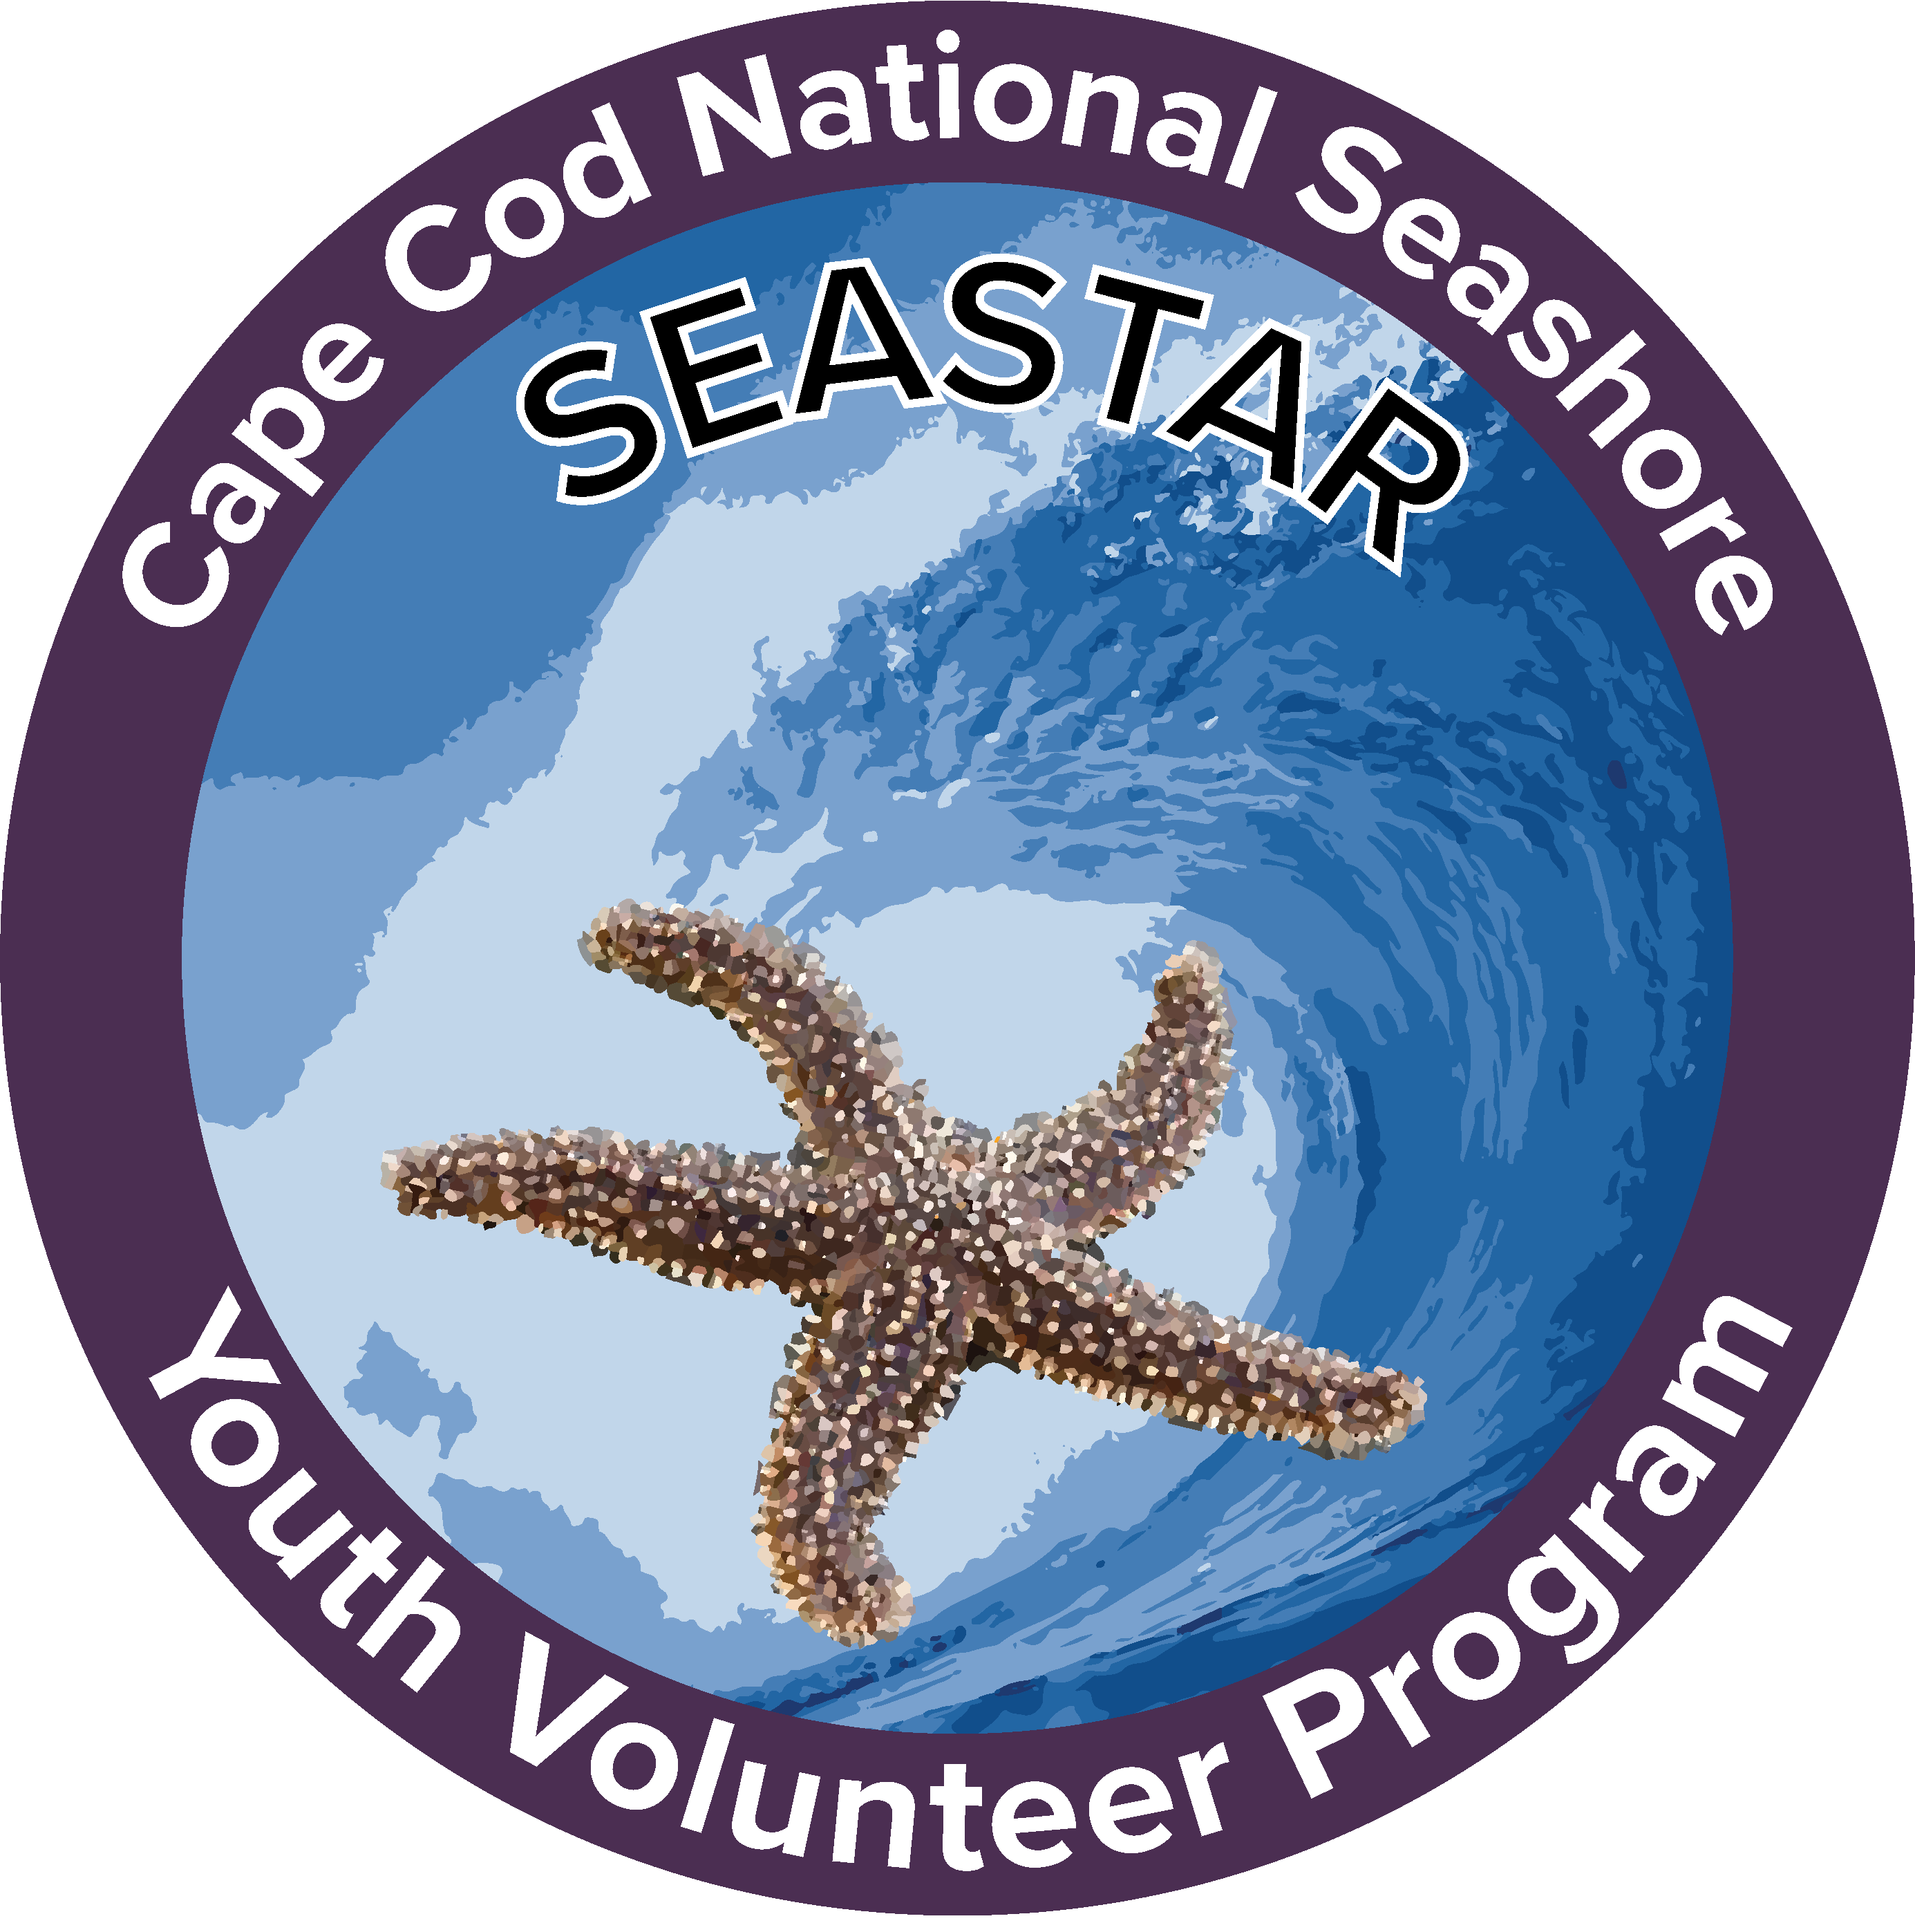 Logo for SEASTAR program, wave crashing with a star fish emblem, text reads, "Cape Cod National Seashore, SEASTAR, Youth Volunteer Program."